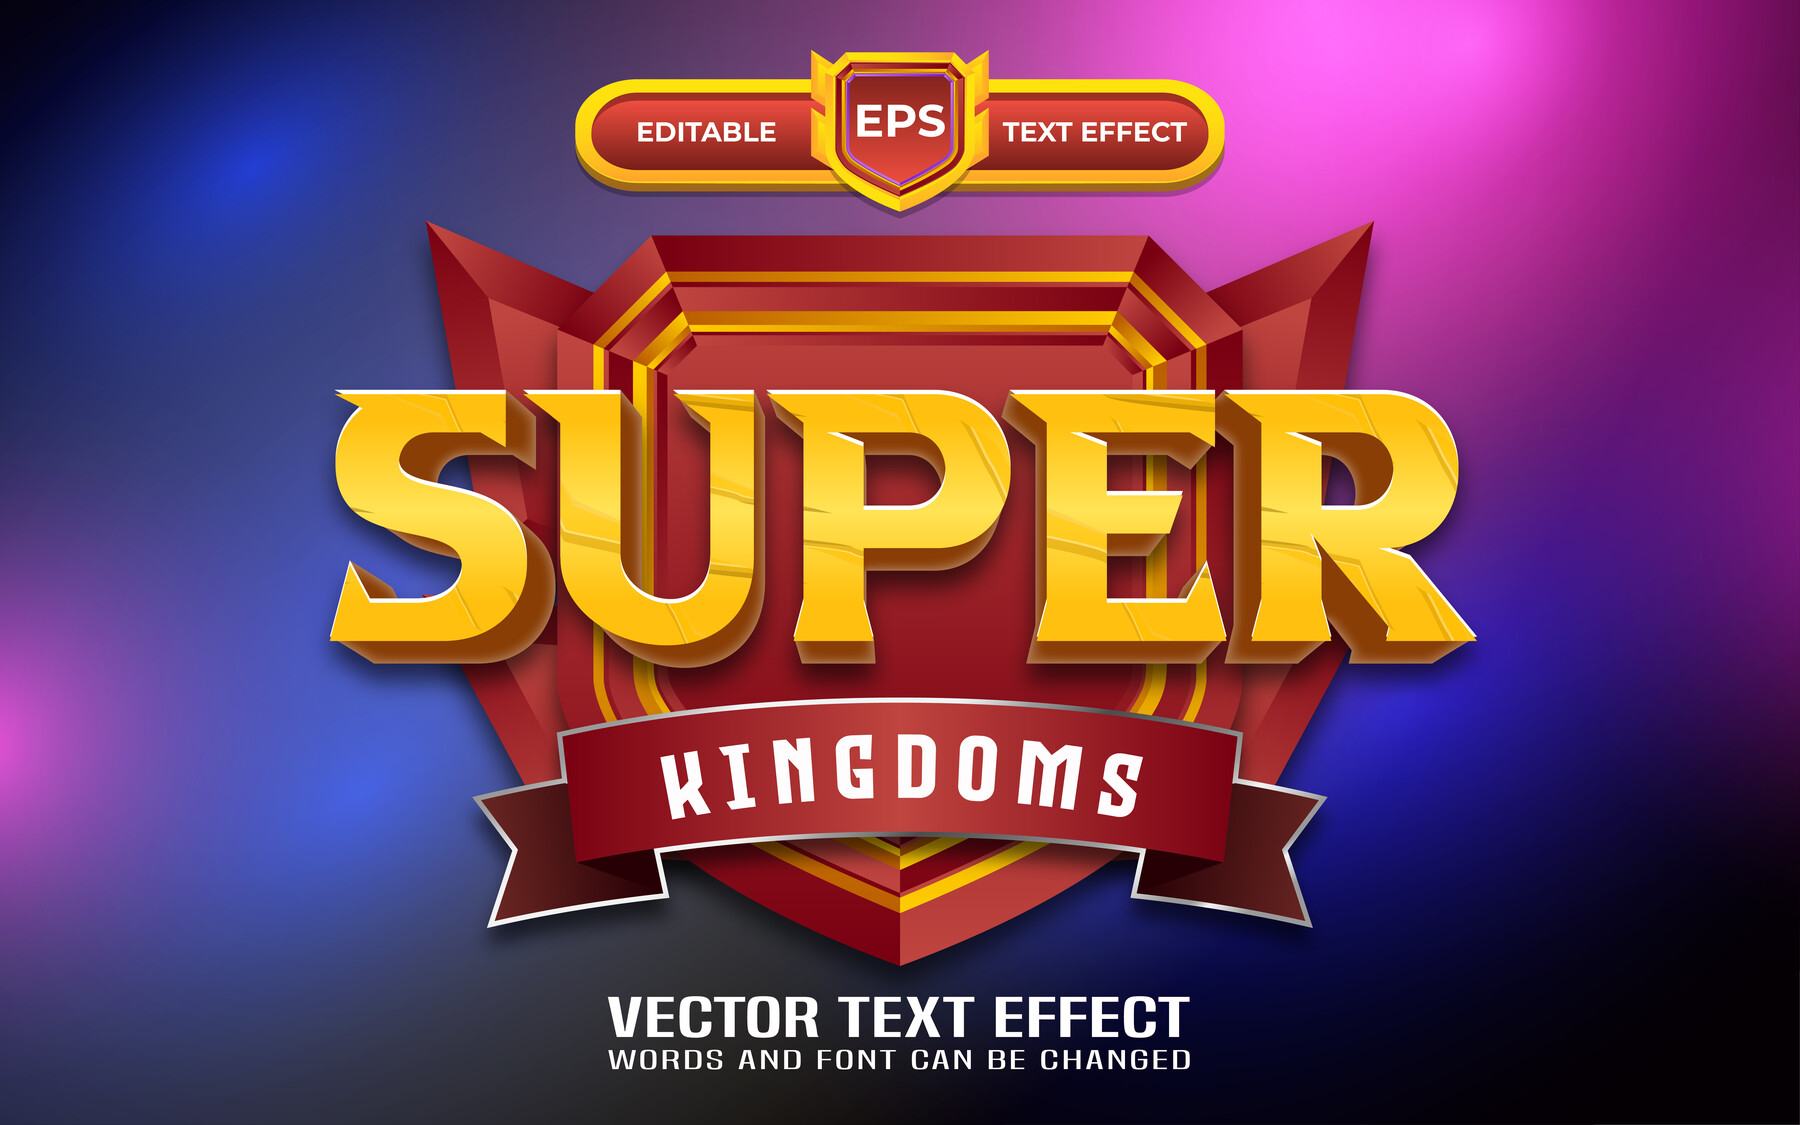 Wonder Text Effect and Logo Design Word